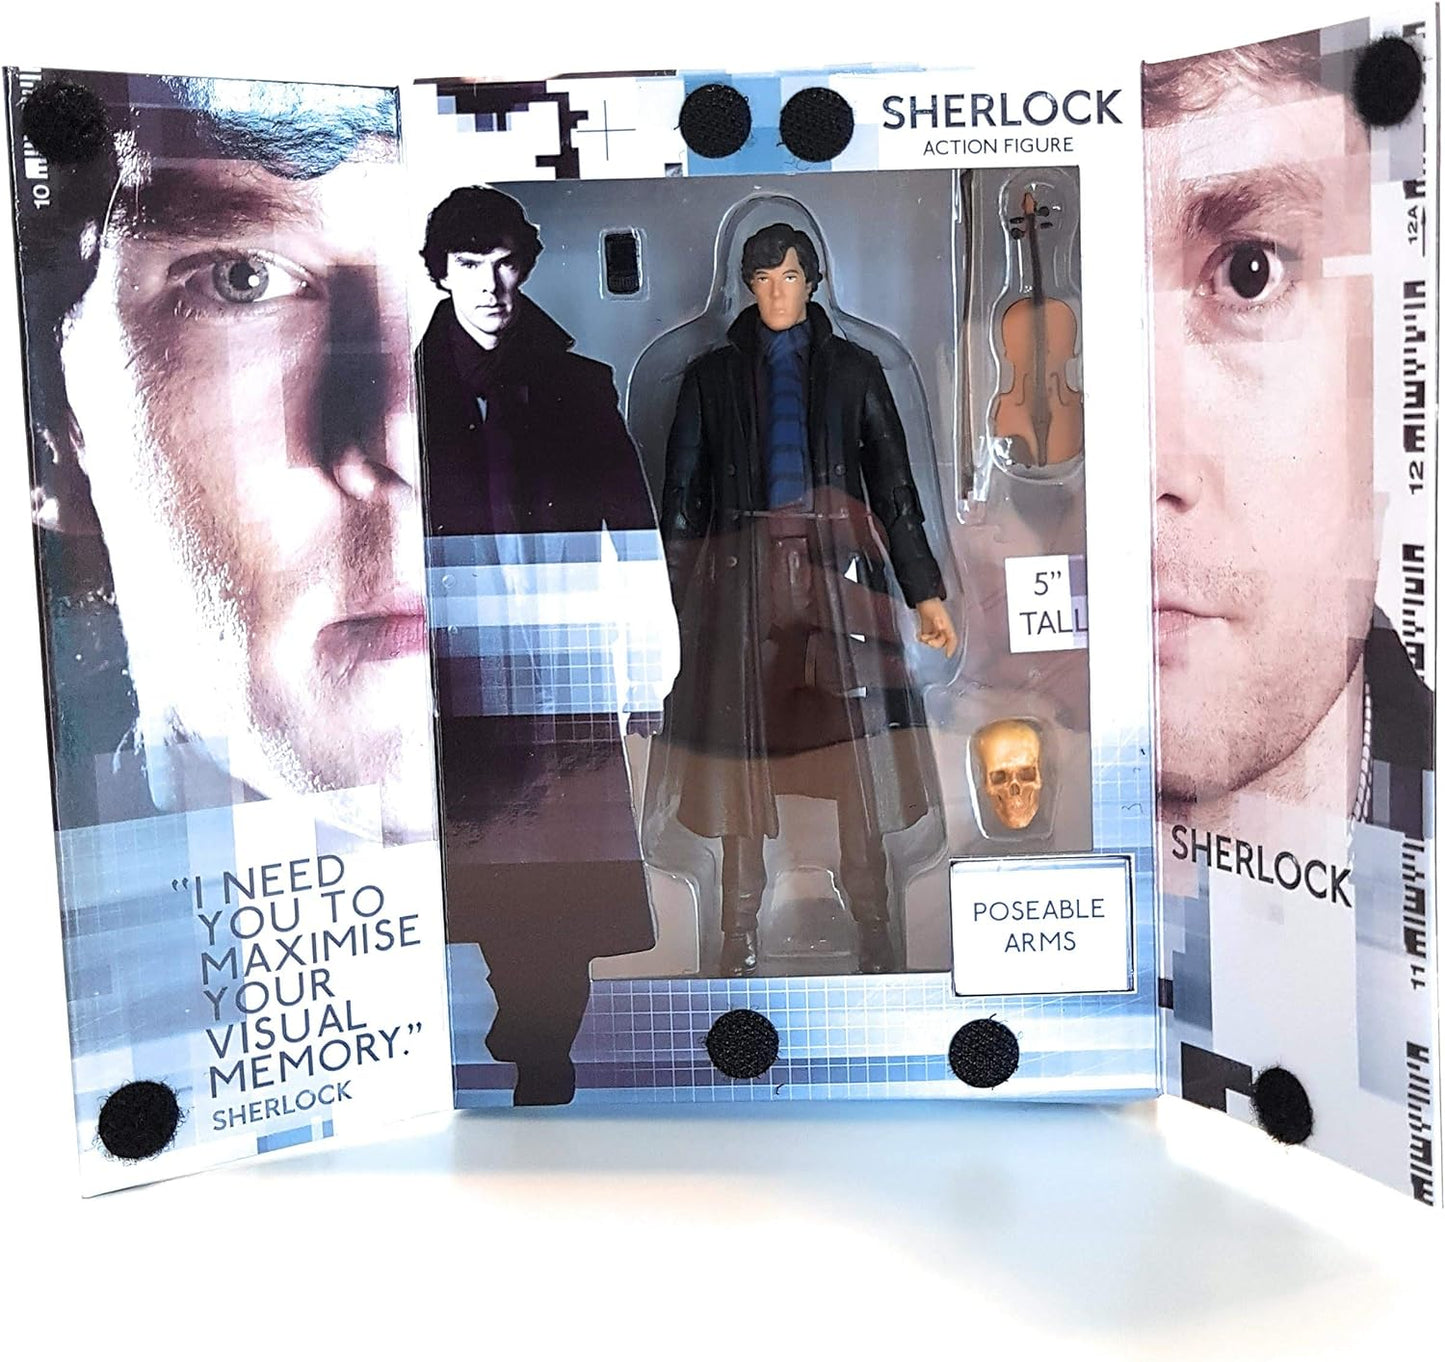 Figura de acción de escala de 5 pulgadas de Sherlock